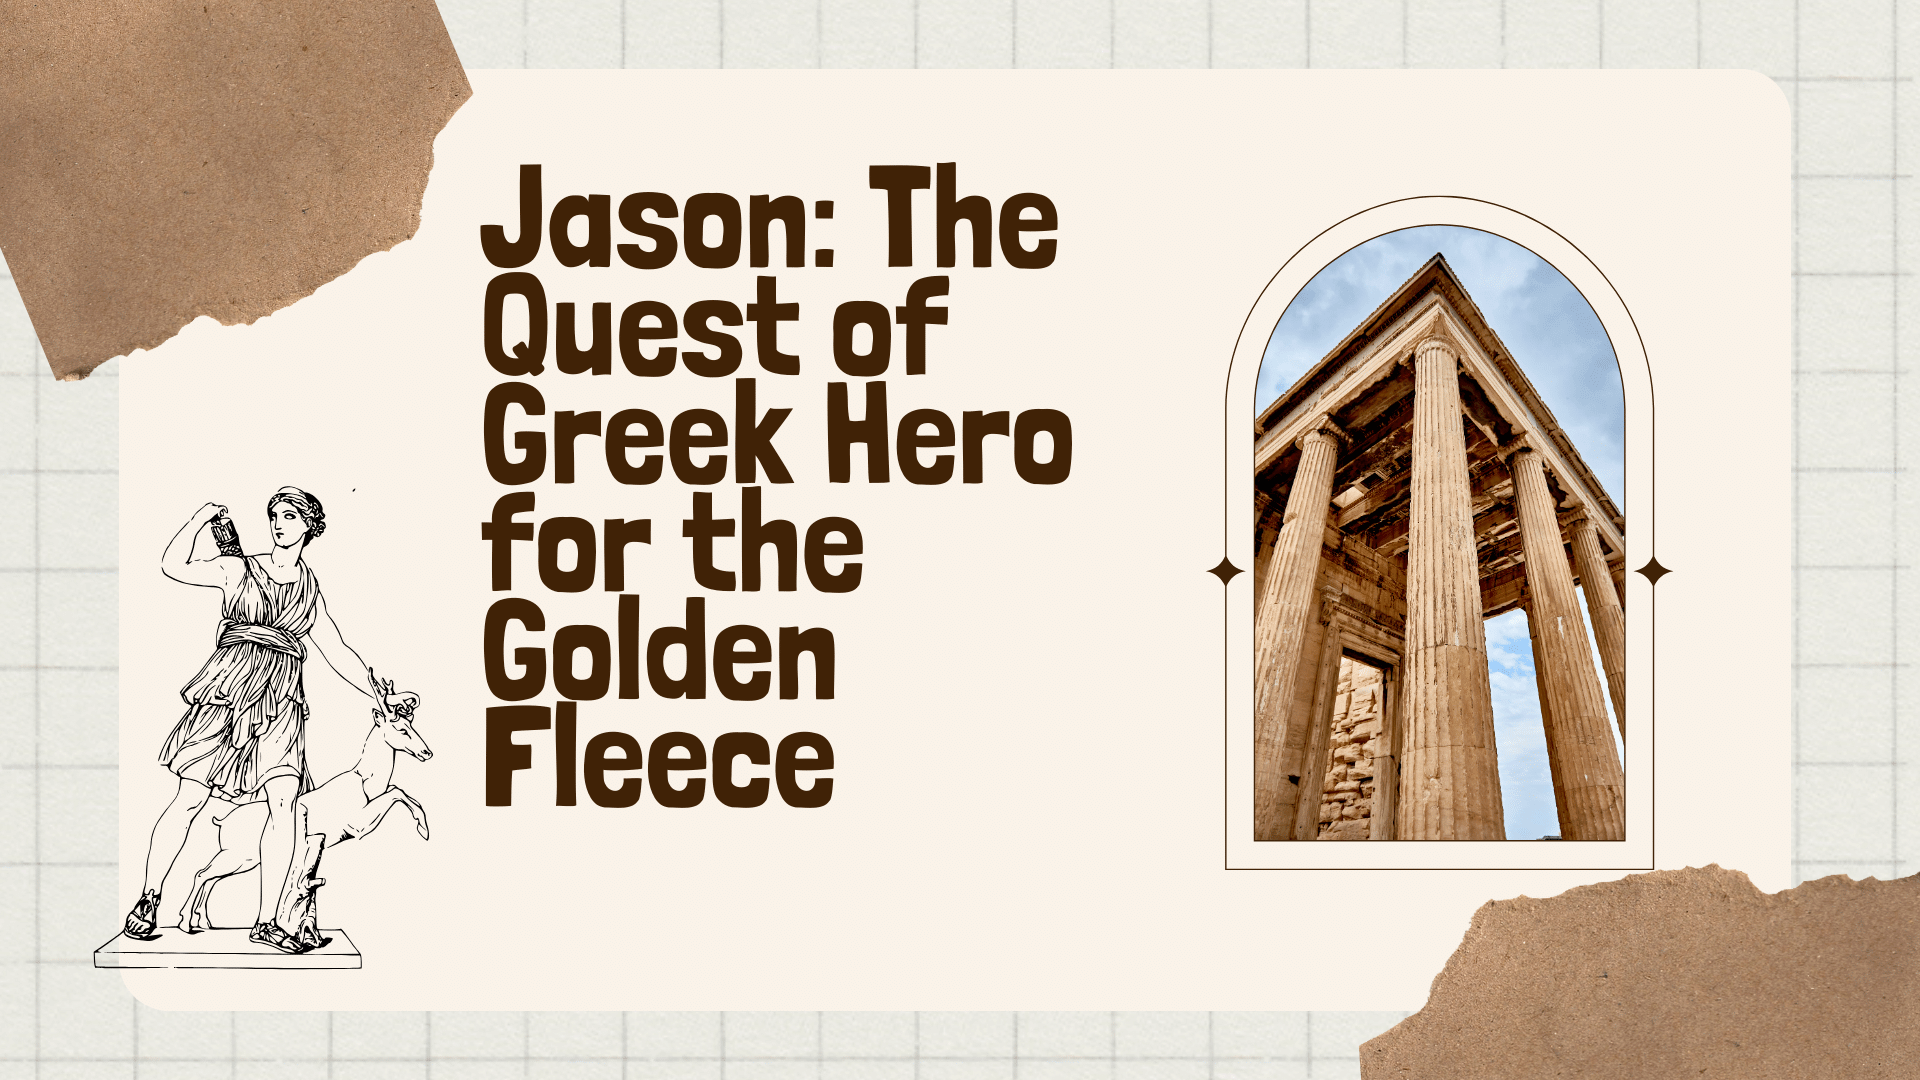 Jason: The Quest of Greek Hero for the Golden Fleece